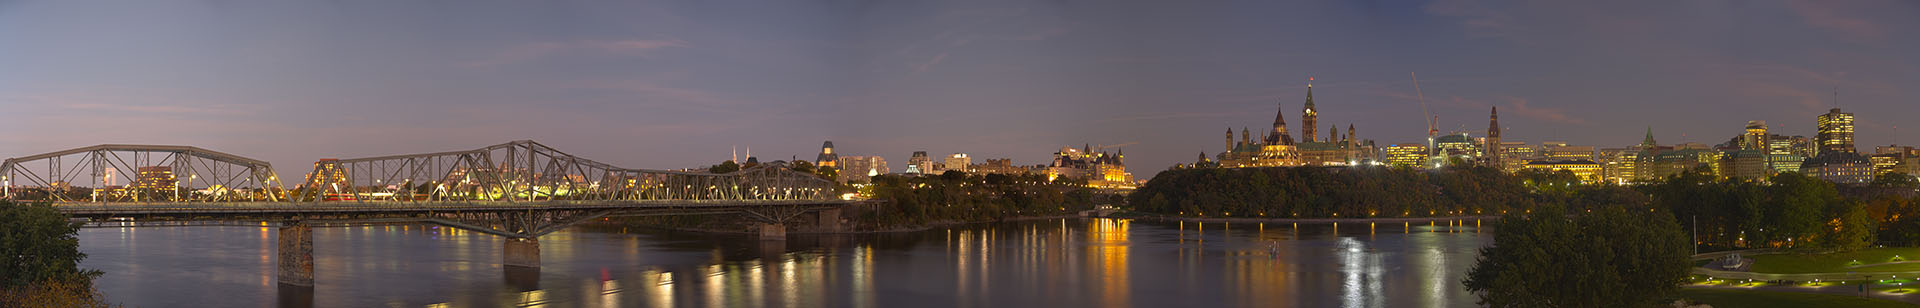 Ottawa - HDR Panorama